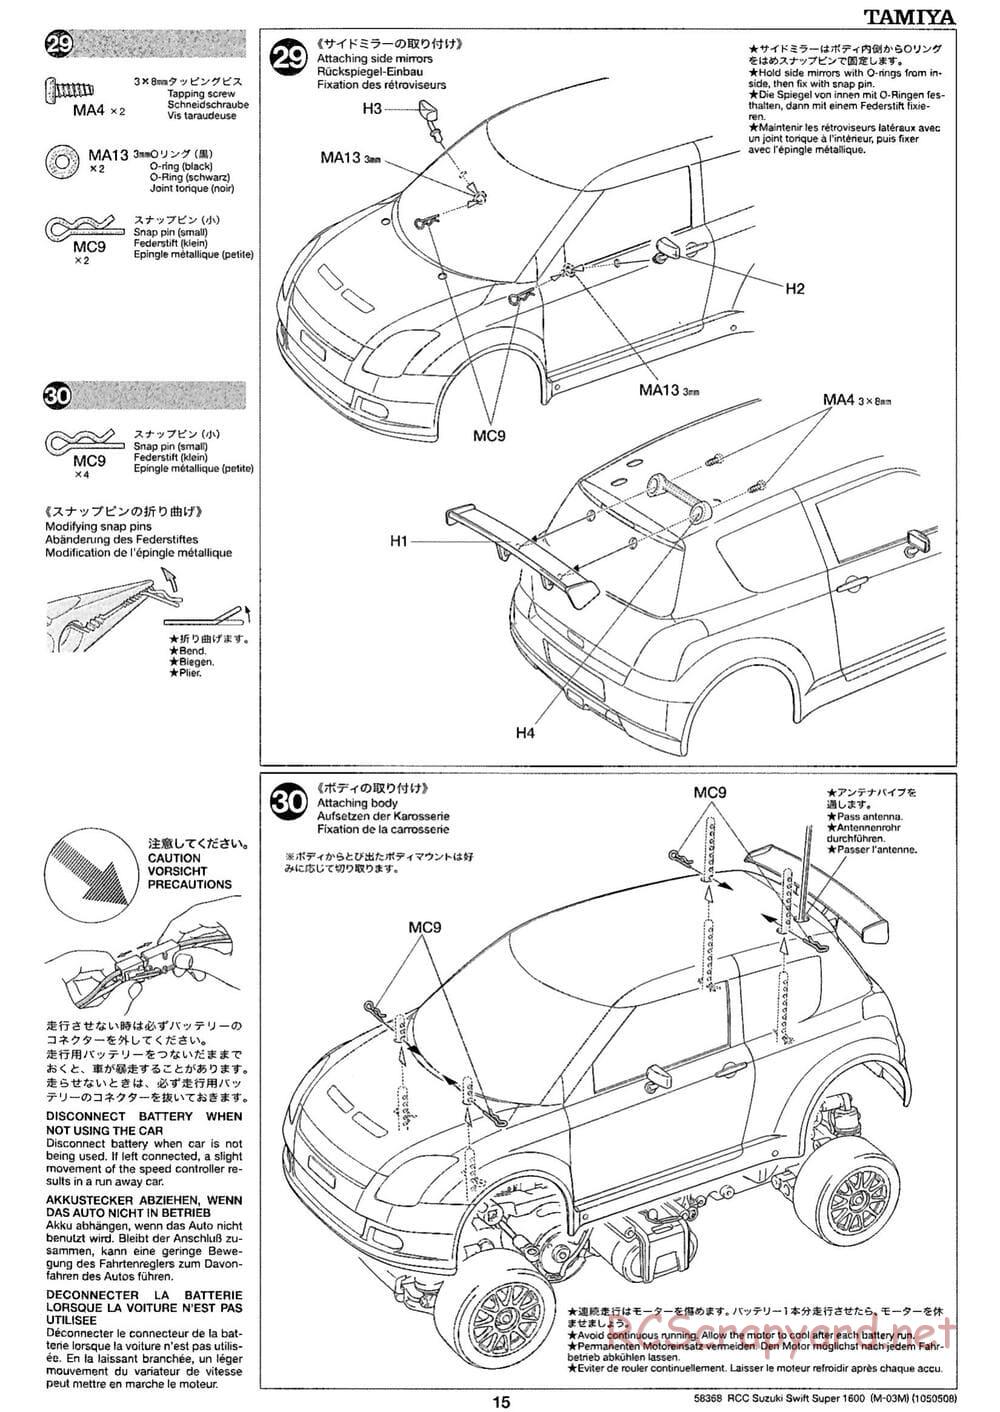 Tamiya - Suzuki Swift Super 1600 - M03M Chassis - Manual - Page 15